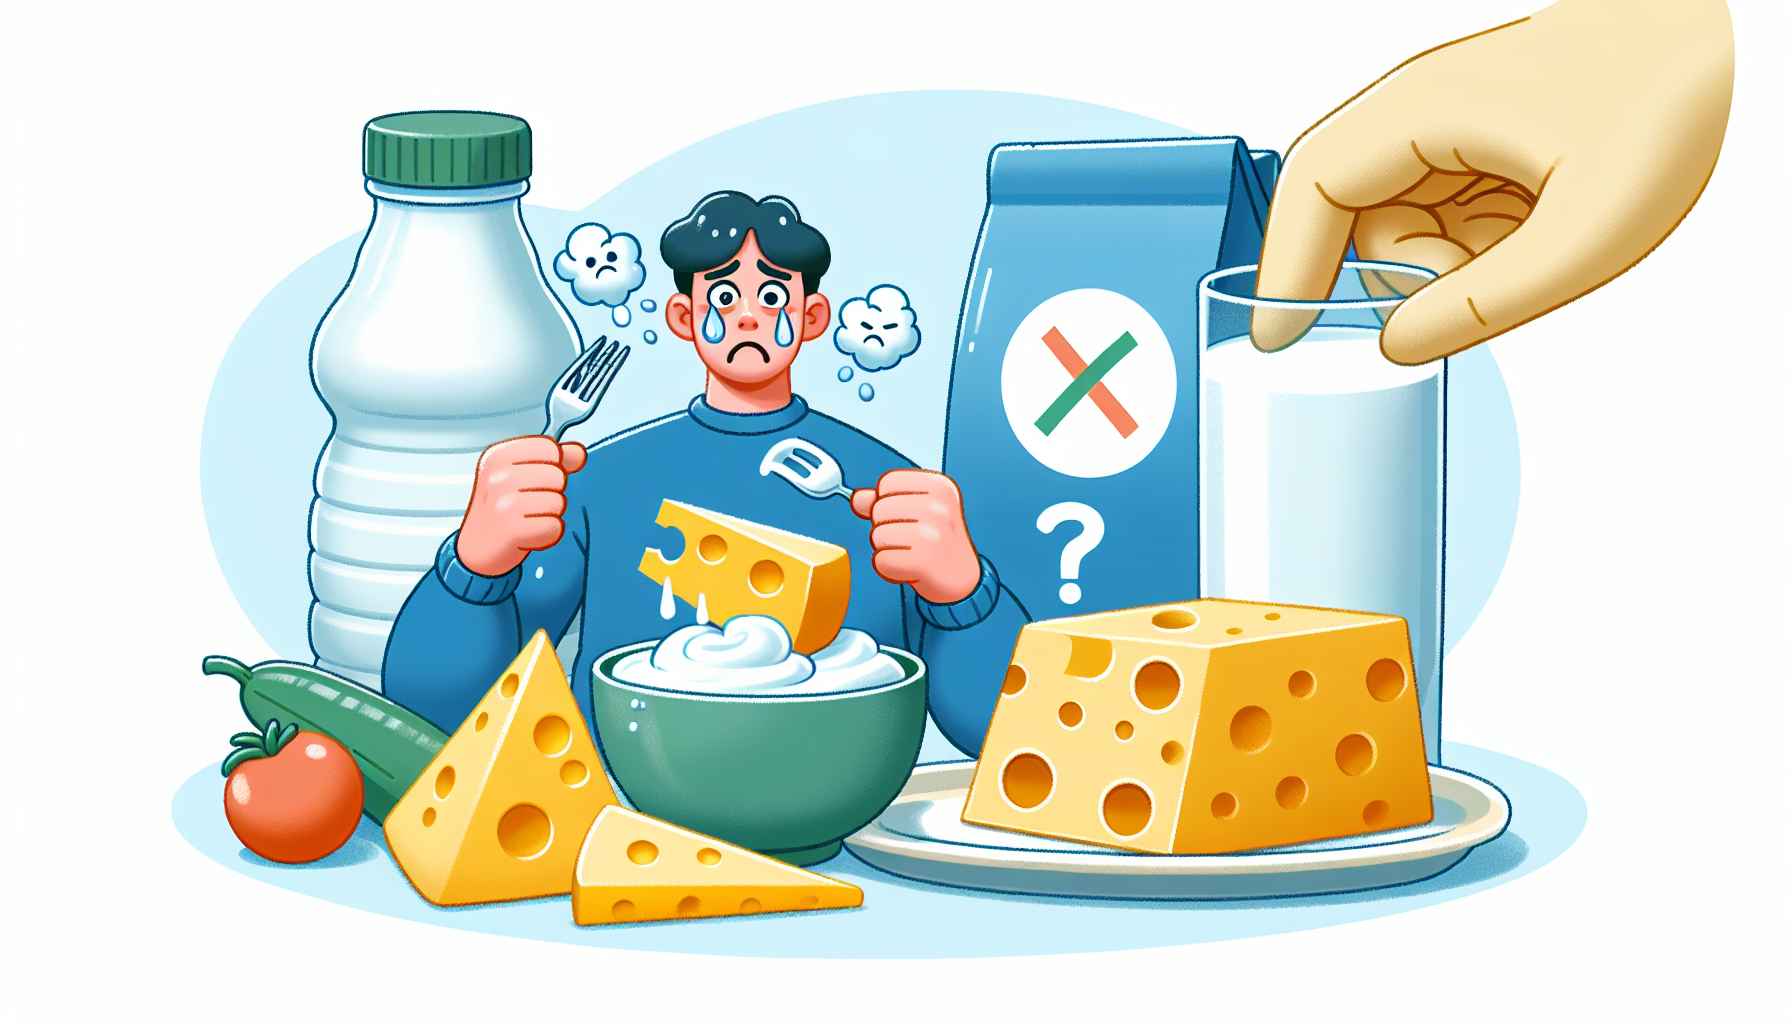 Os principais erros ao consumir queijo no dia a dia